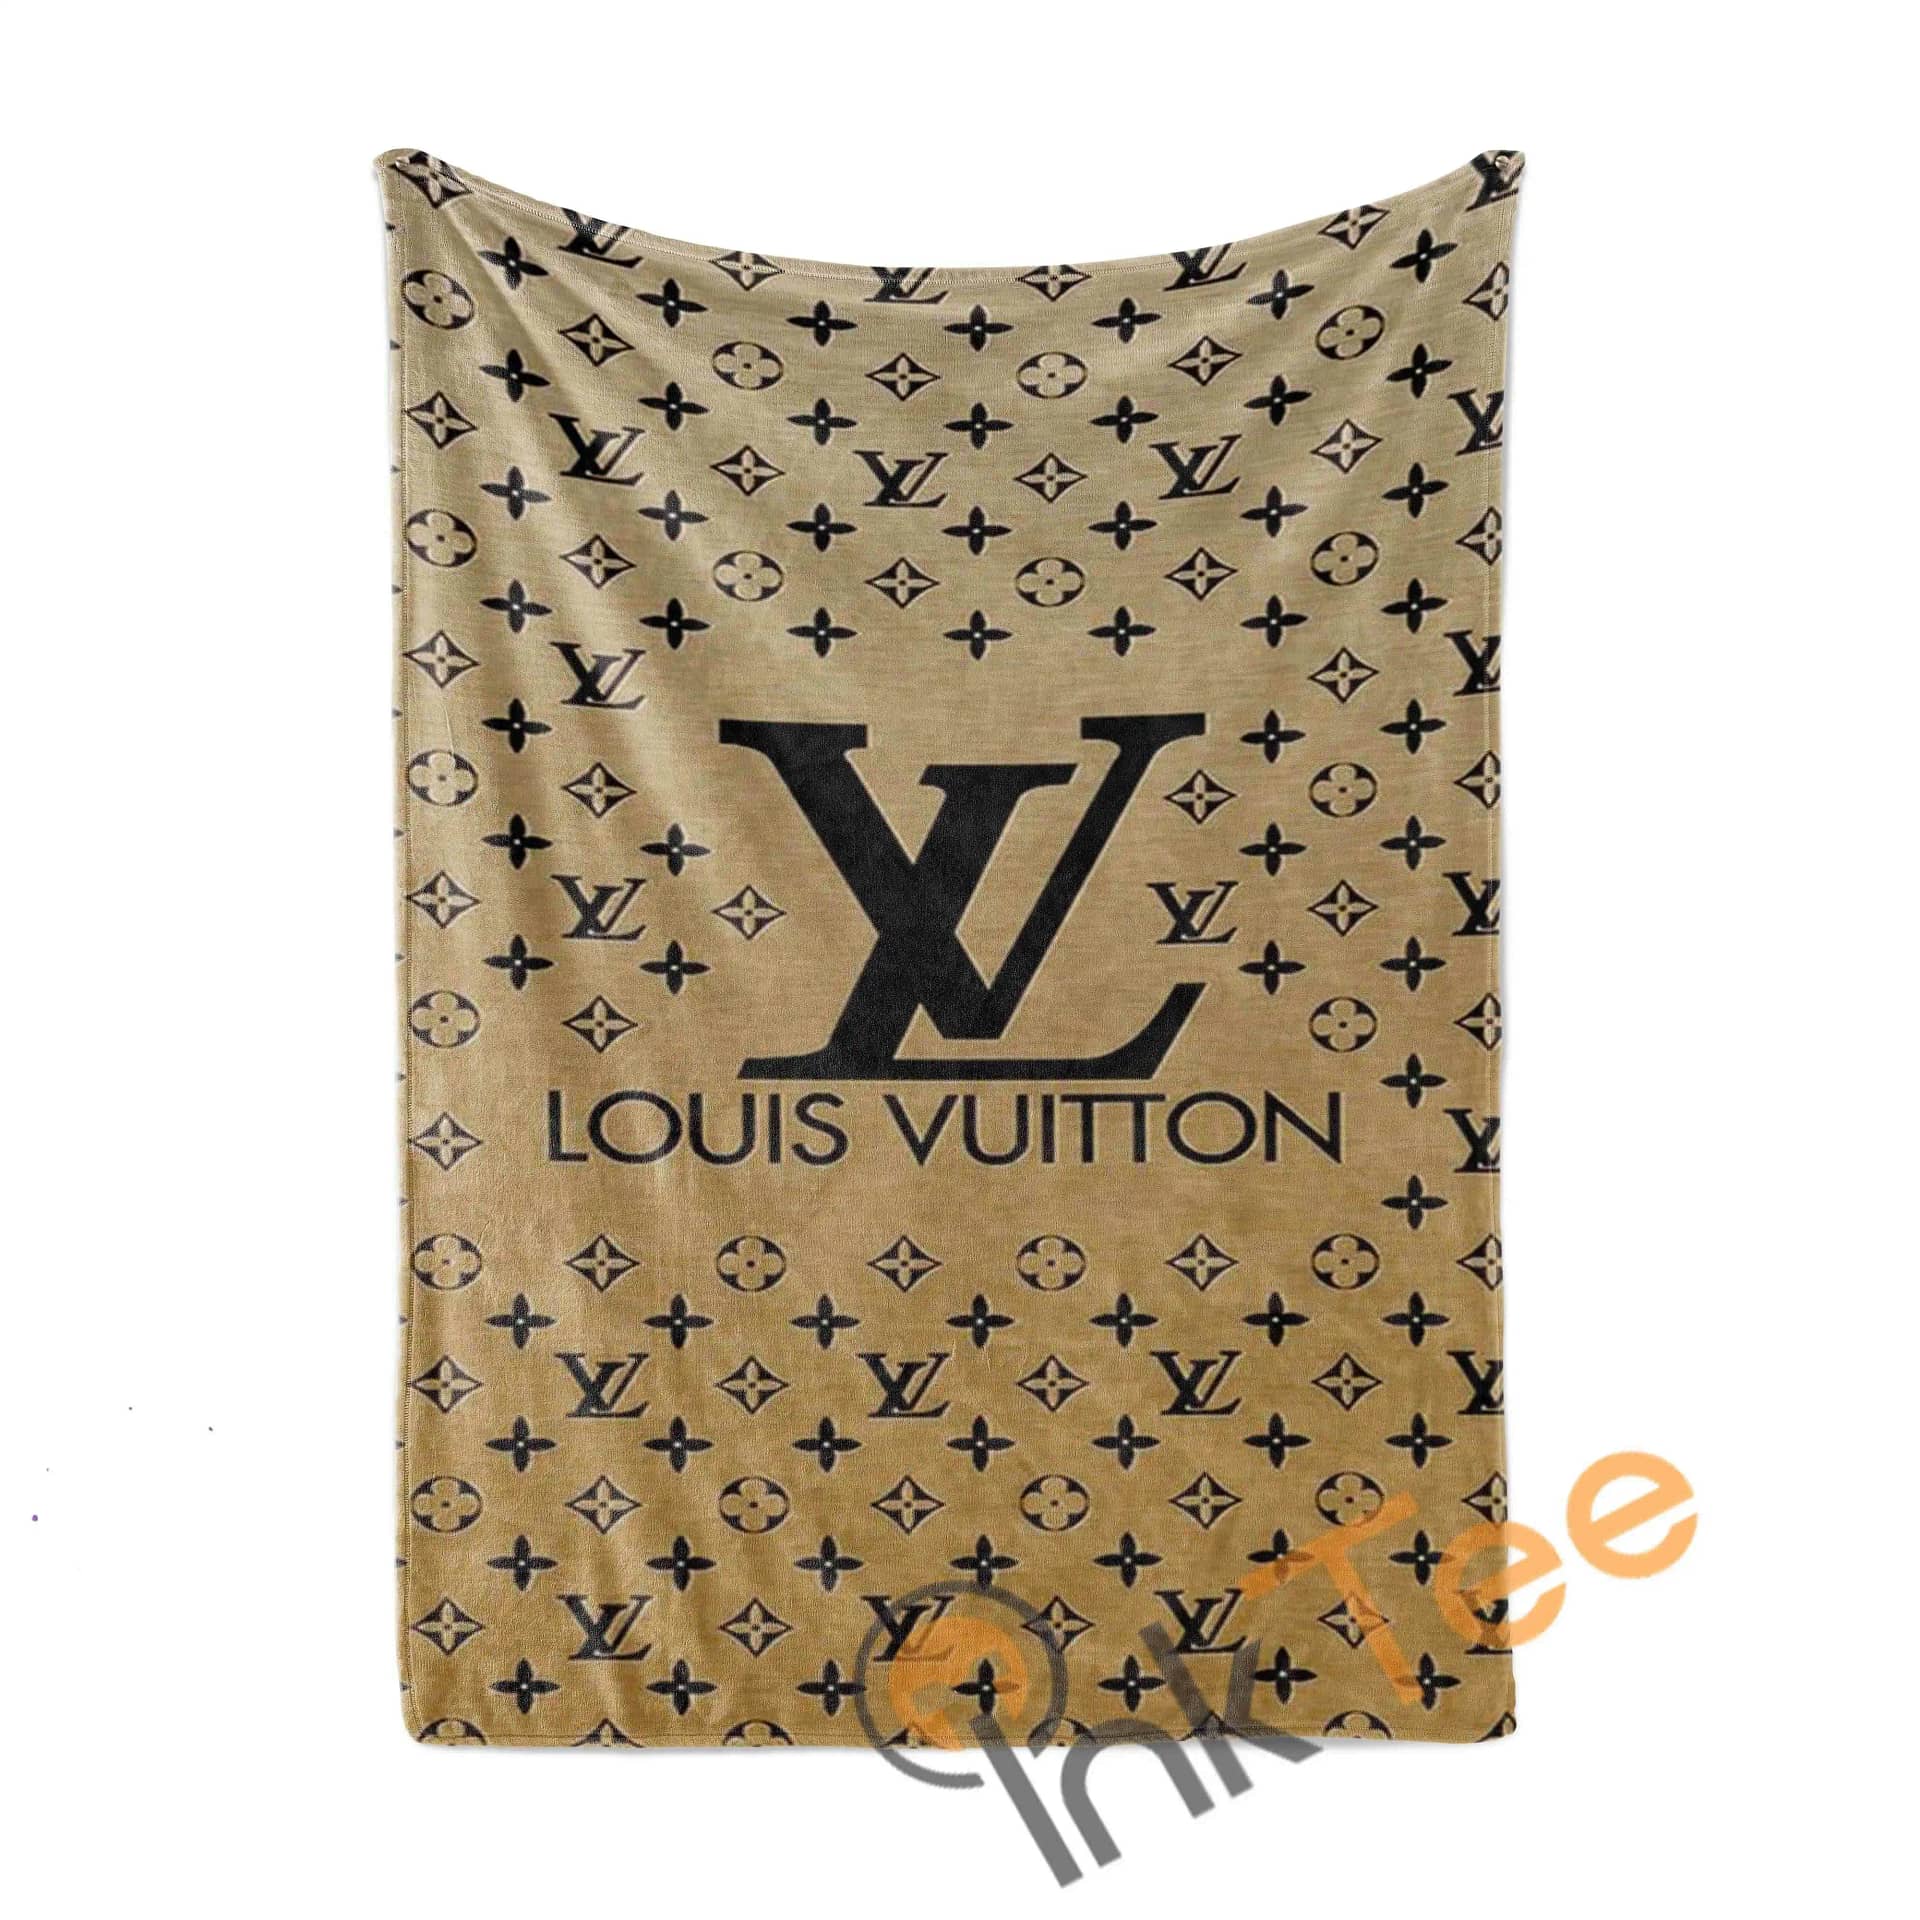 Louis Vuitton Limited Edition Amazon Best Seller Sku 4065 Fleece Blanket